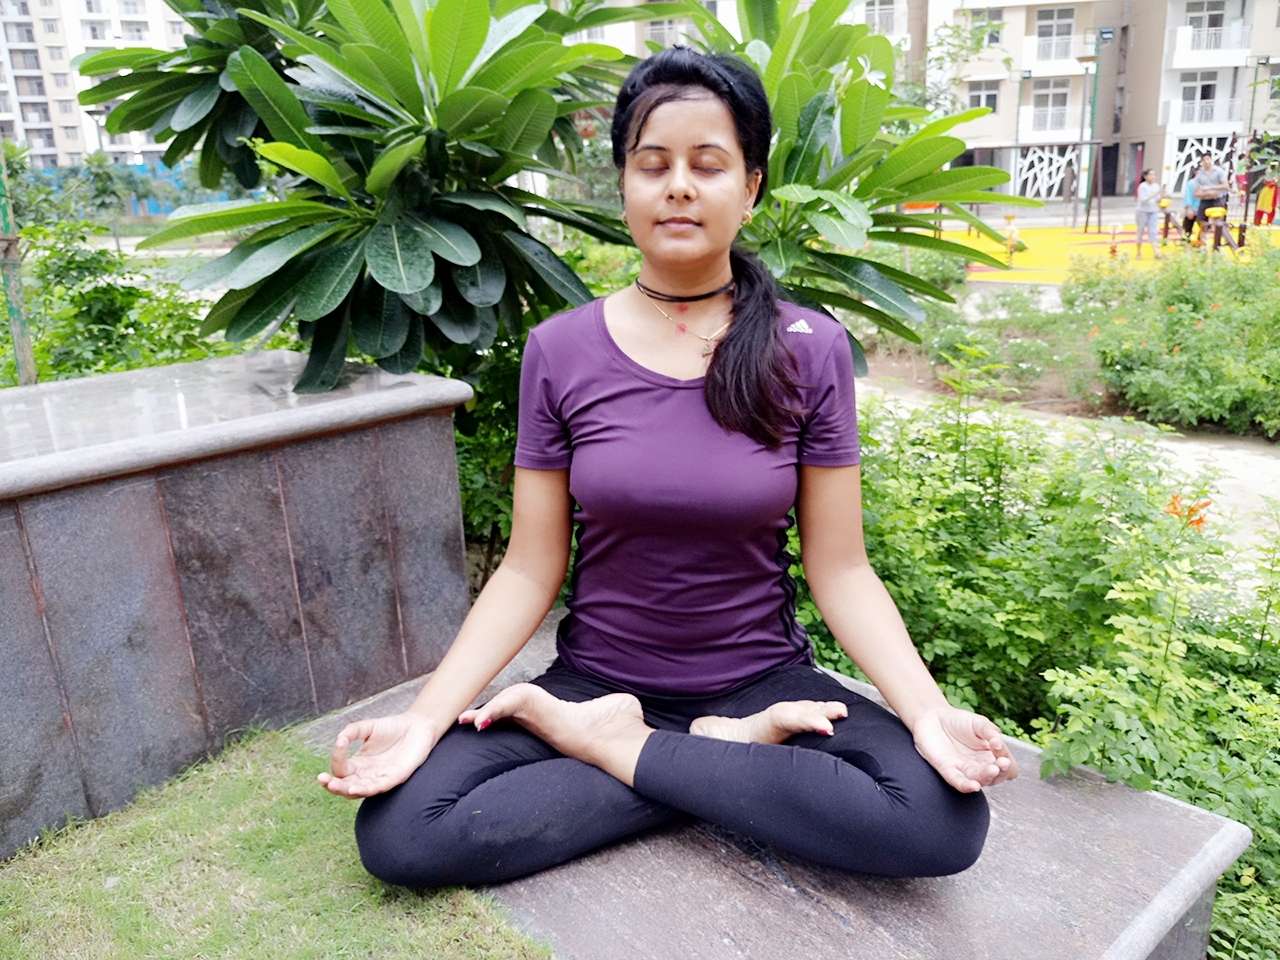 Ms. Sarita Choudhary from Mahagun moderne  noida  ,Greater Noida, Uttar Pradesh, 201301, India 3 years experience in Speciality Hatha yoga | Kayawell